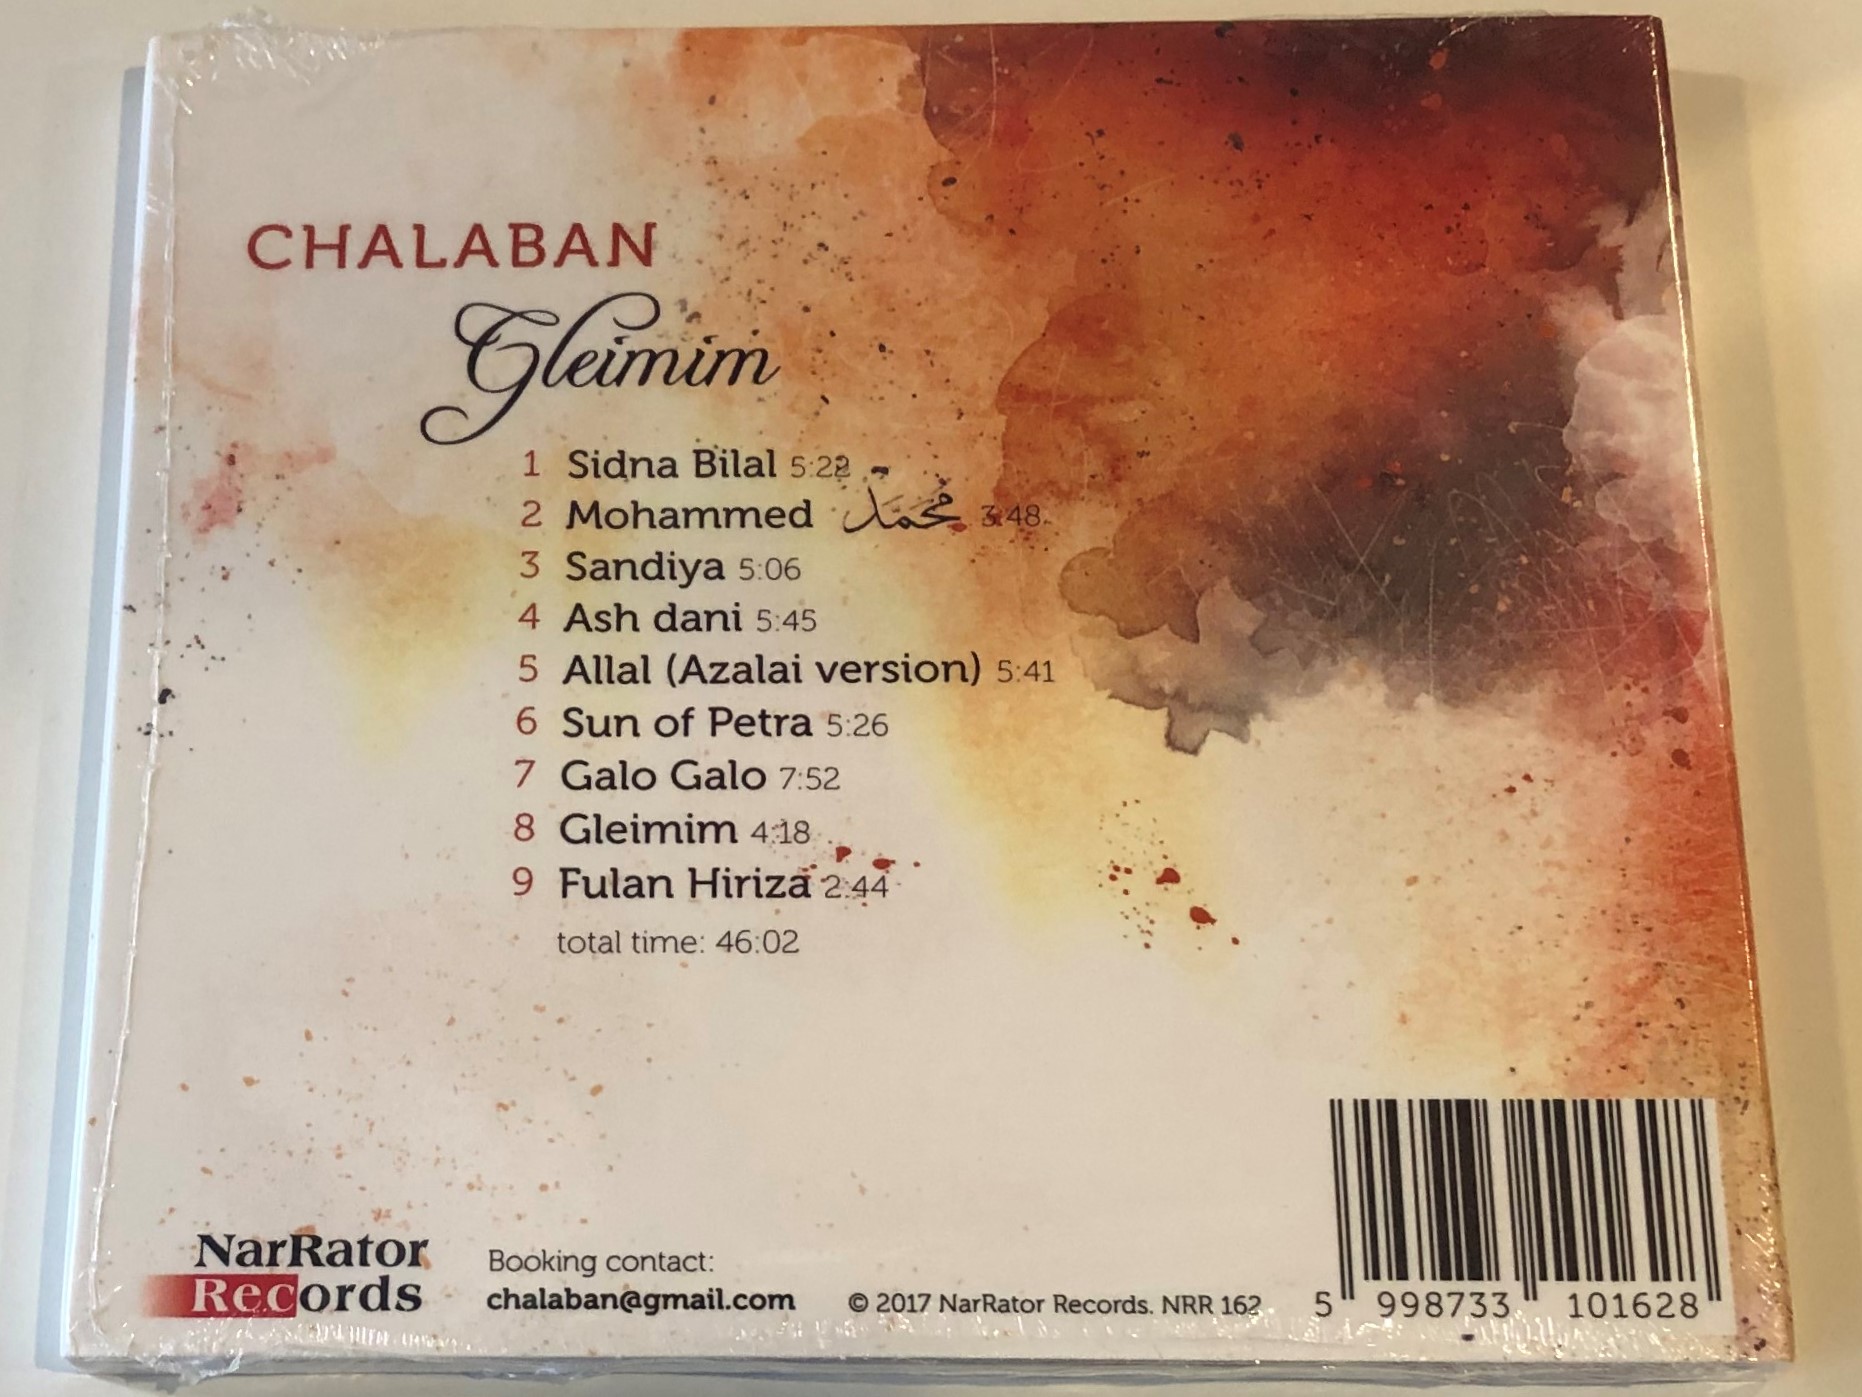 chalaban-gleimim-narrator-records-audio-cd-2017-nrr162-2-.jpg